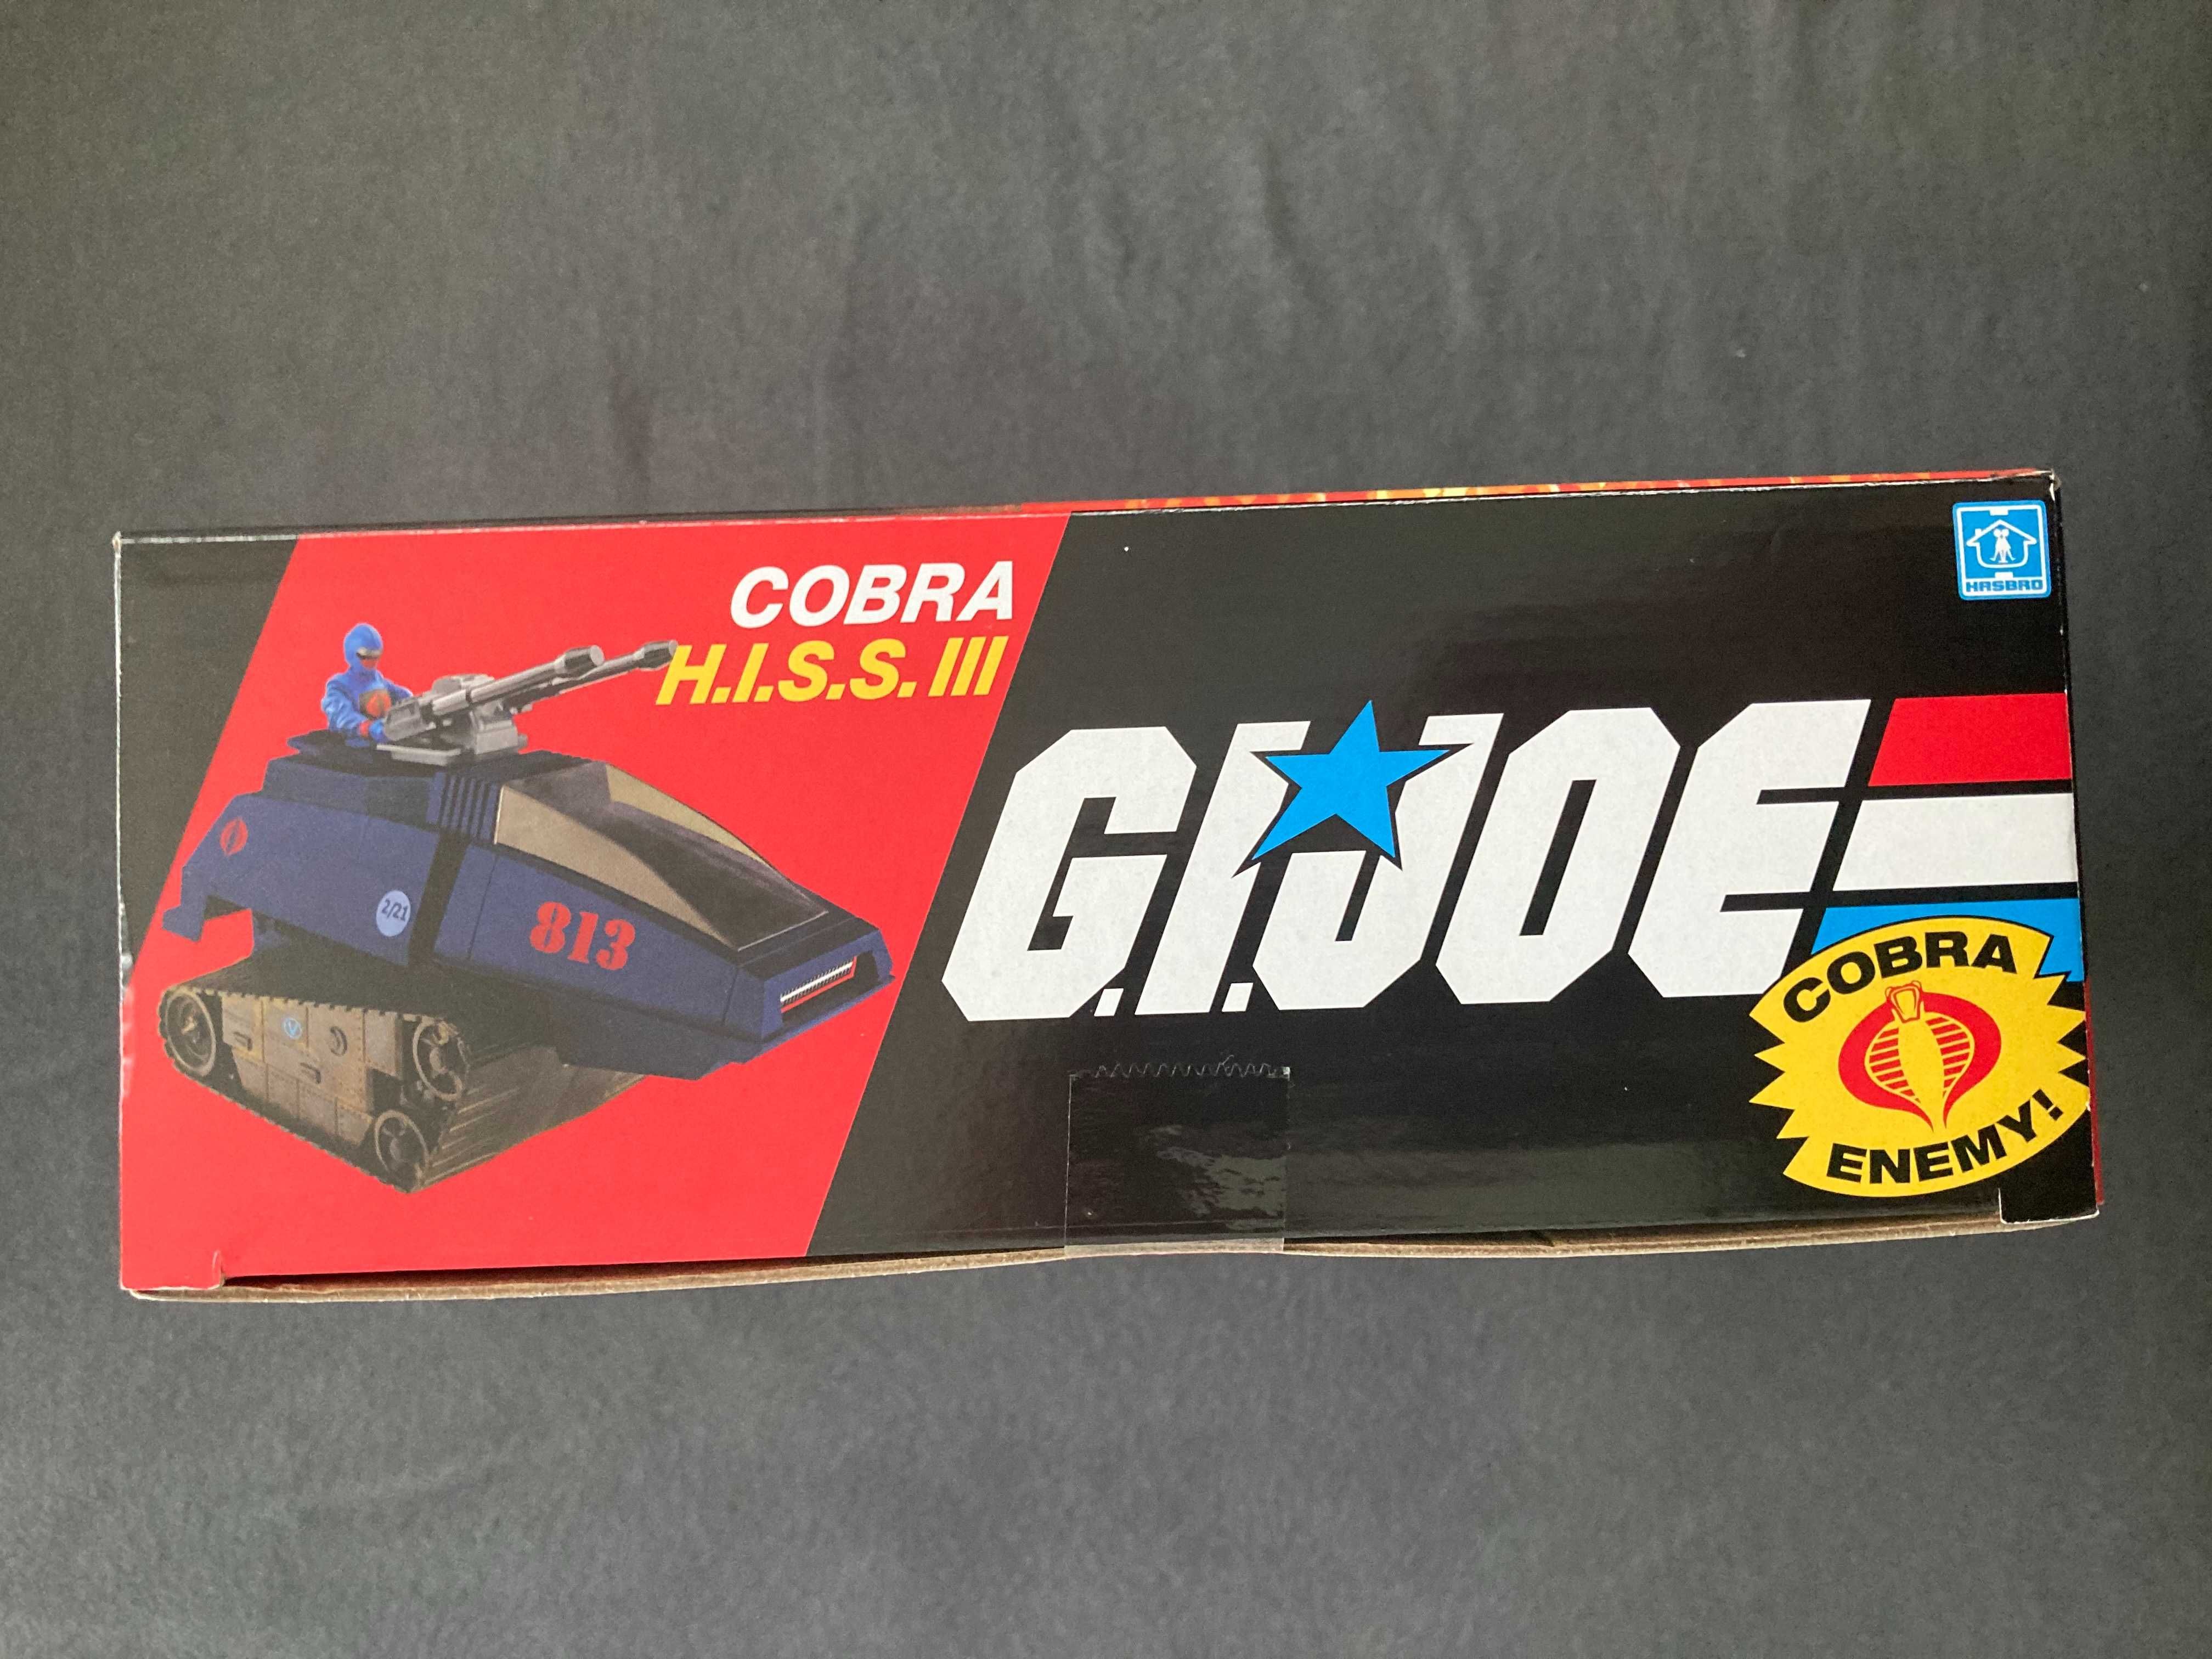 G.I. Joe Cobra H.I.S.S. III